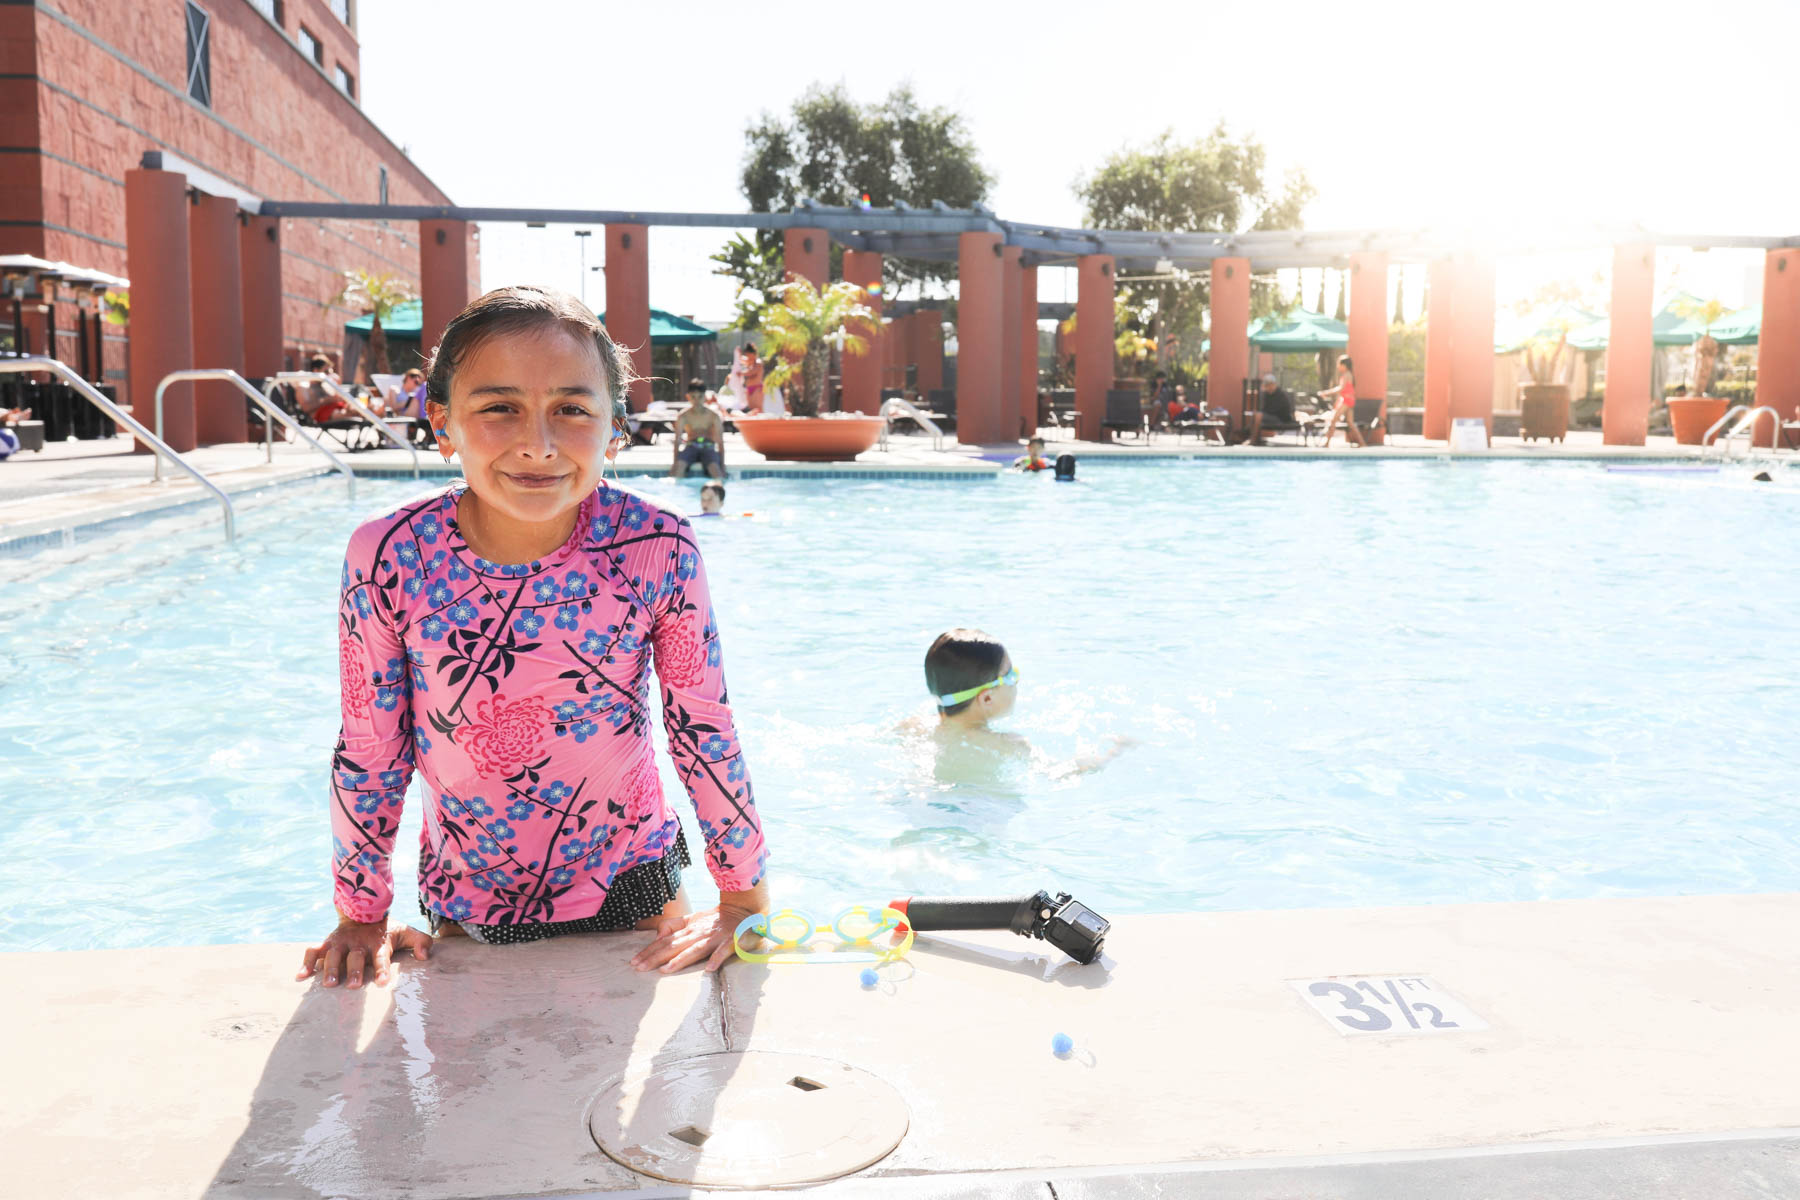 kids in the pool #citygirlgonemom #hyattregency #lajollasandiego #lajolla